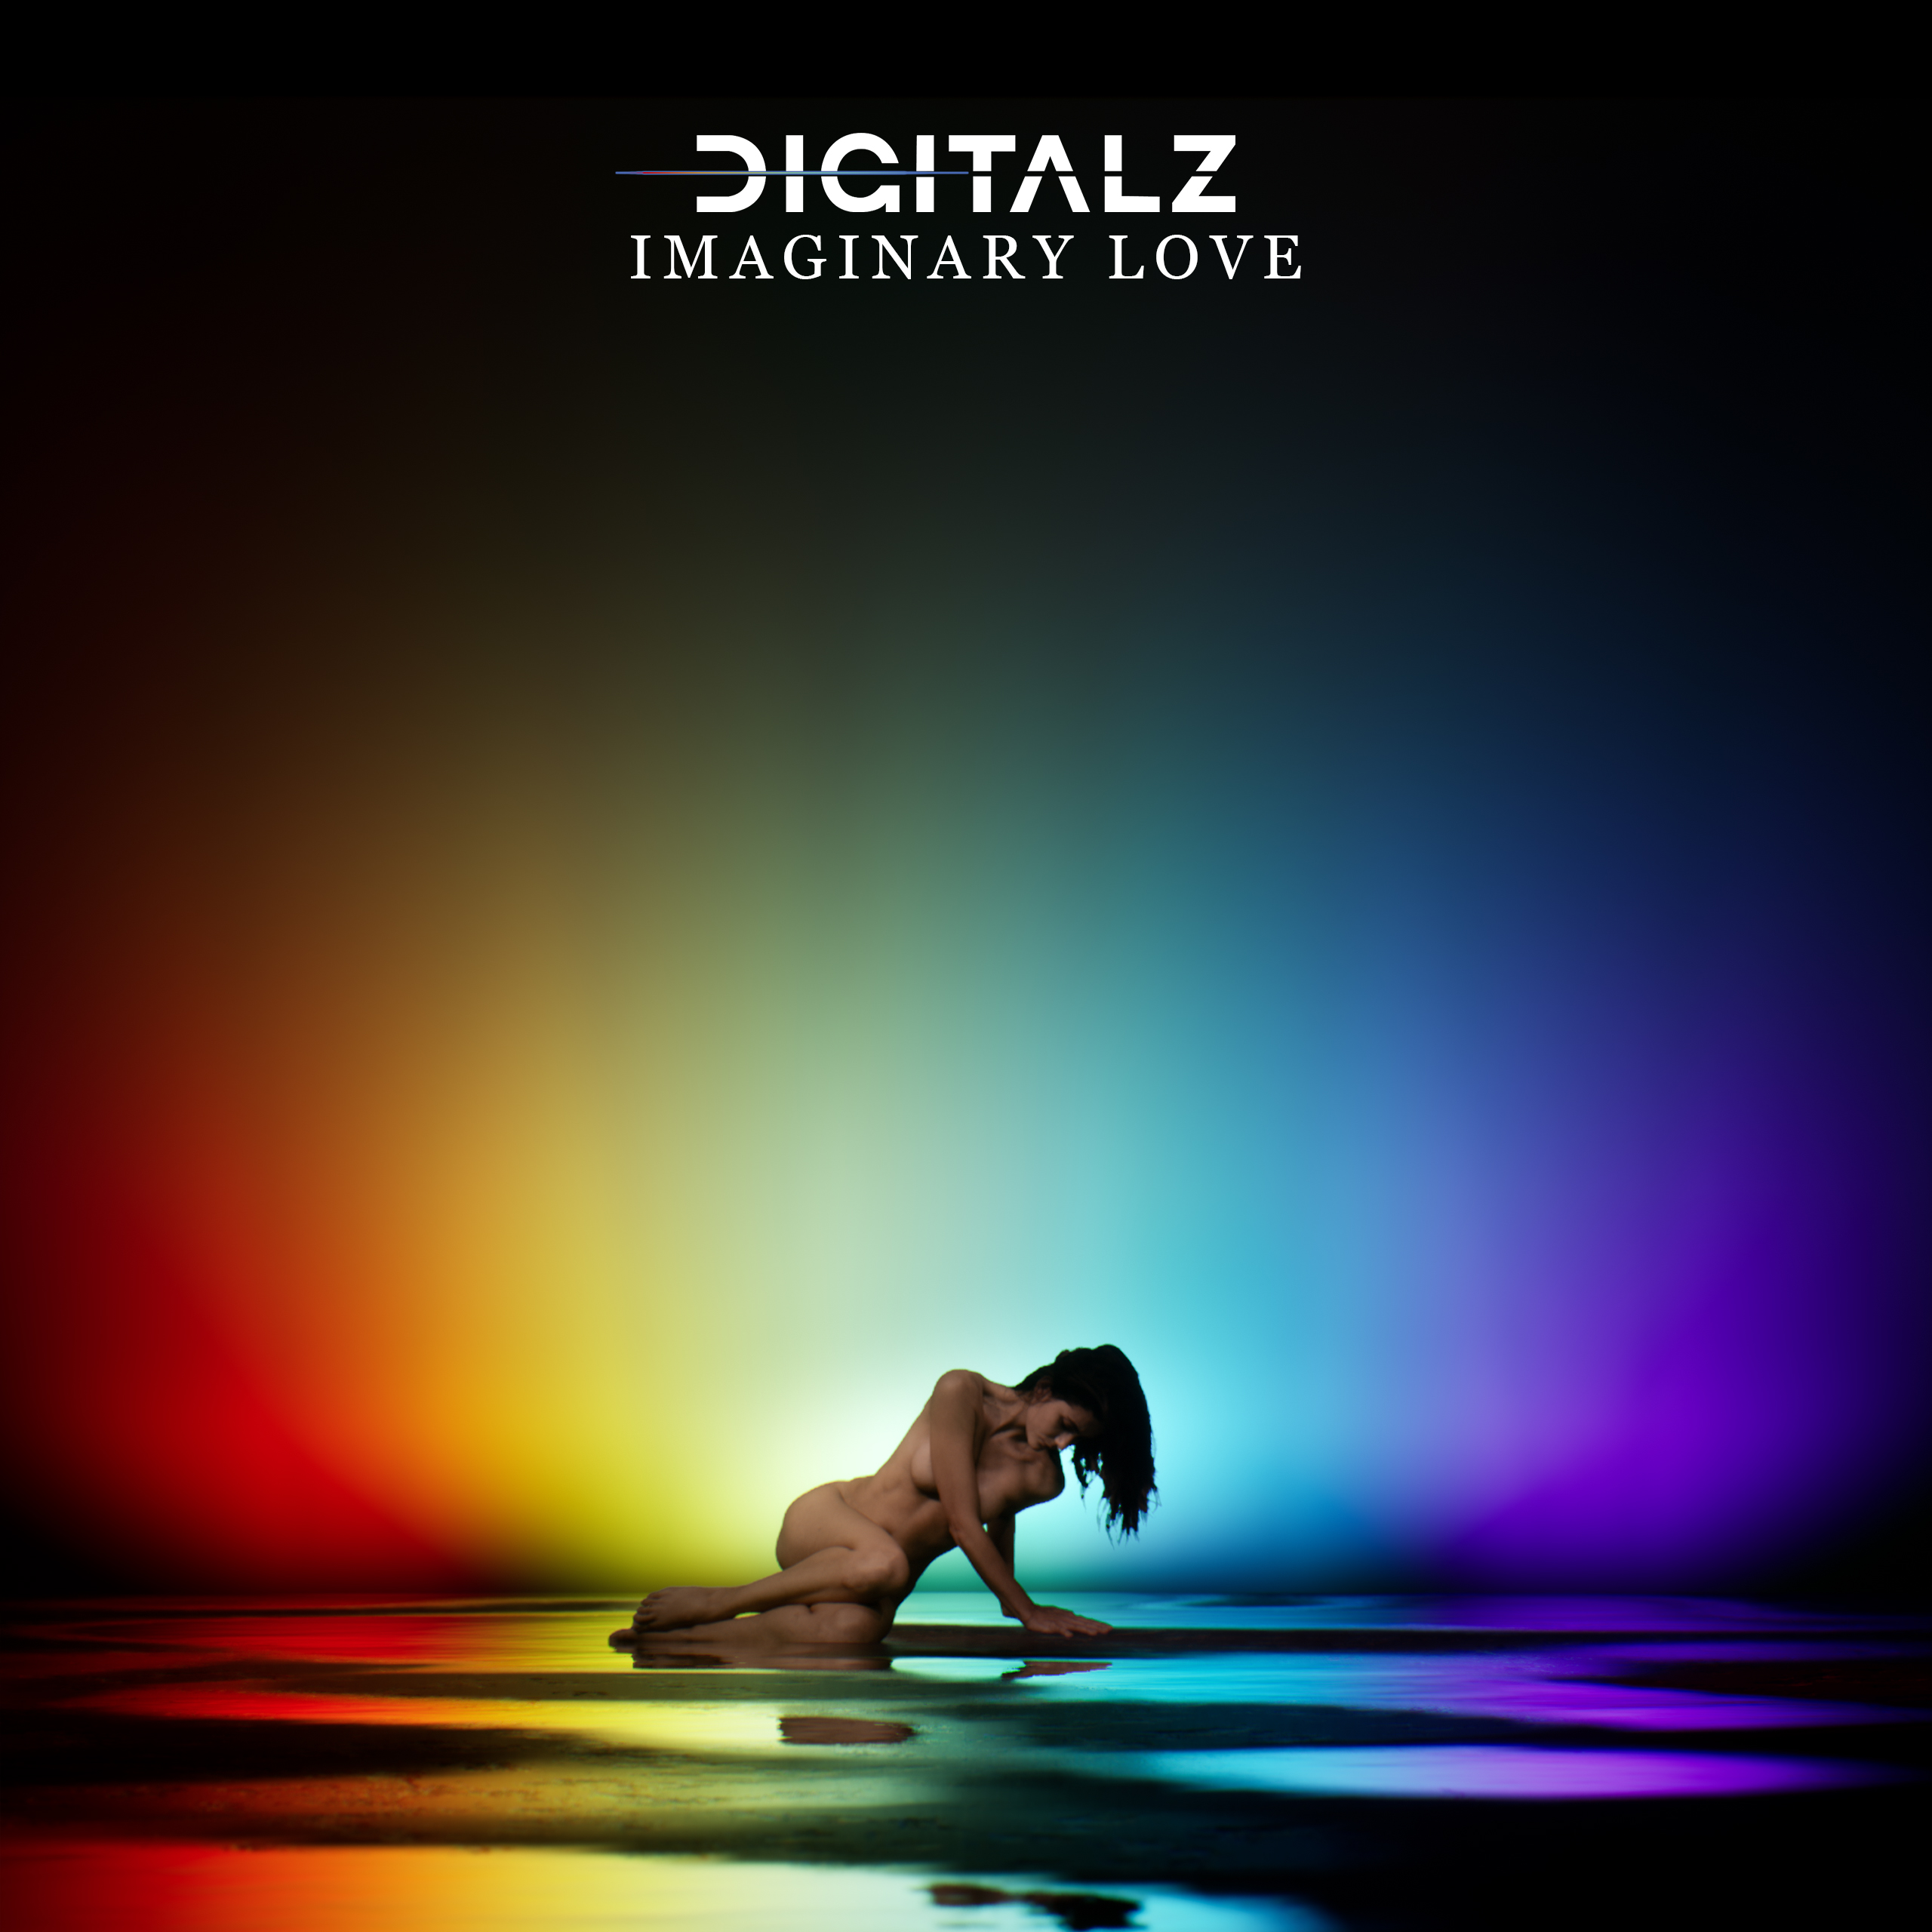 Digitalz - 'Imaginary Love' LP [Art].jpg (1.59 MB)